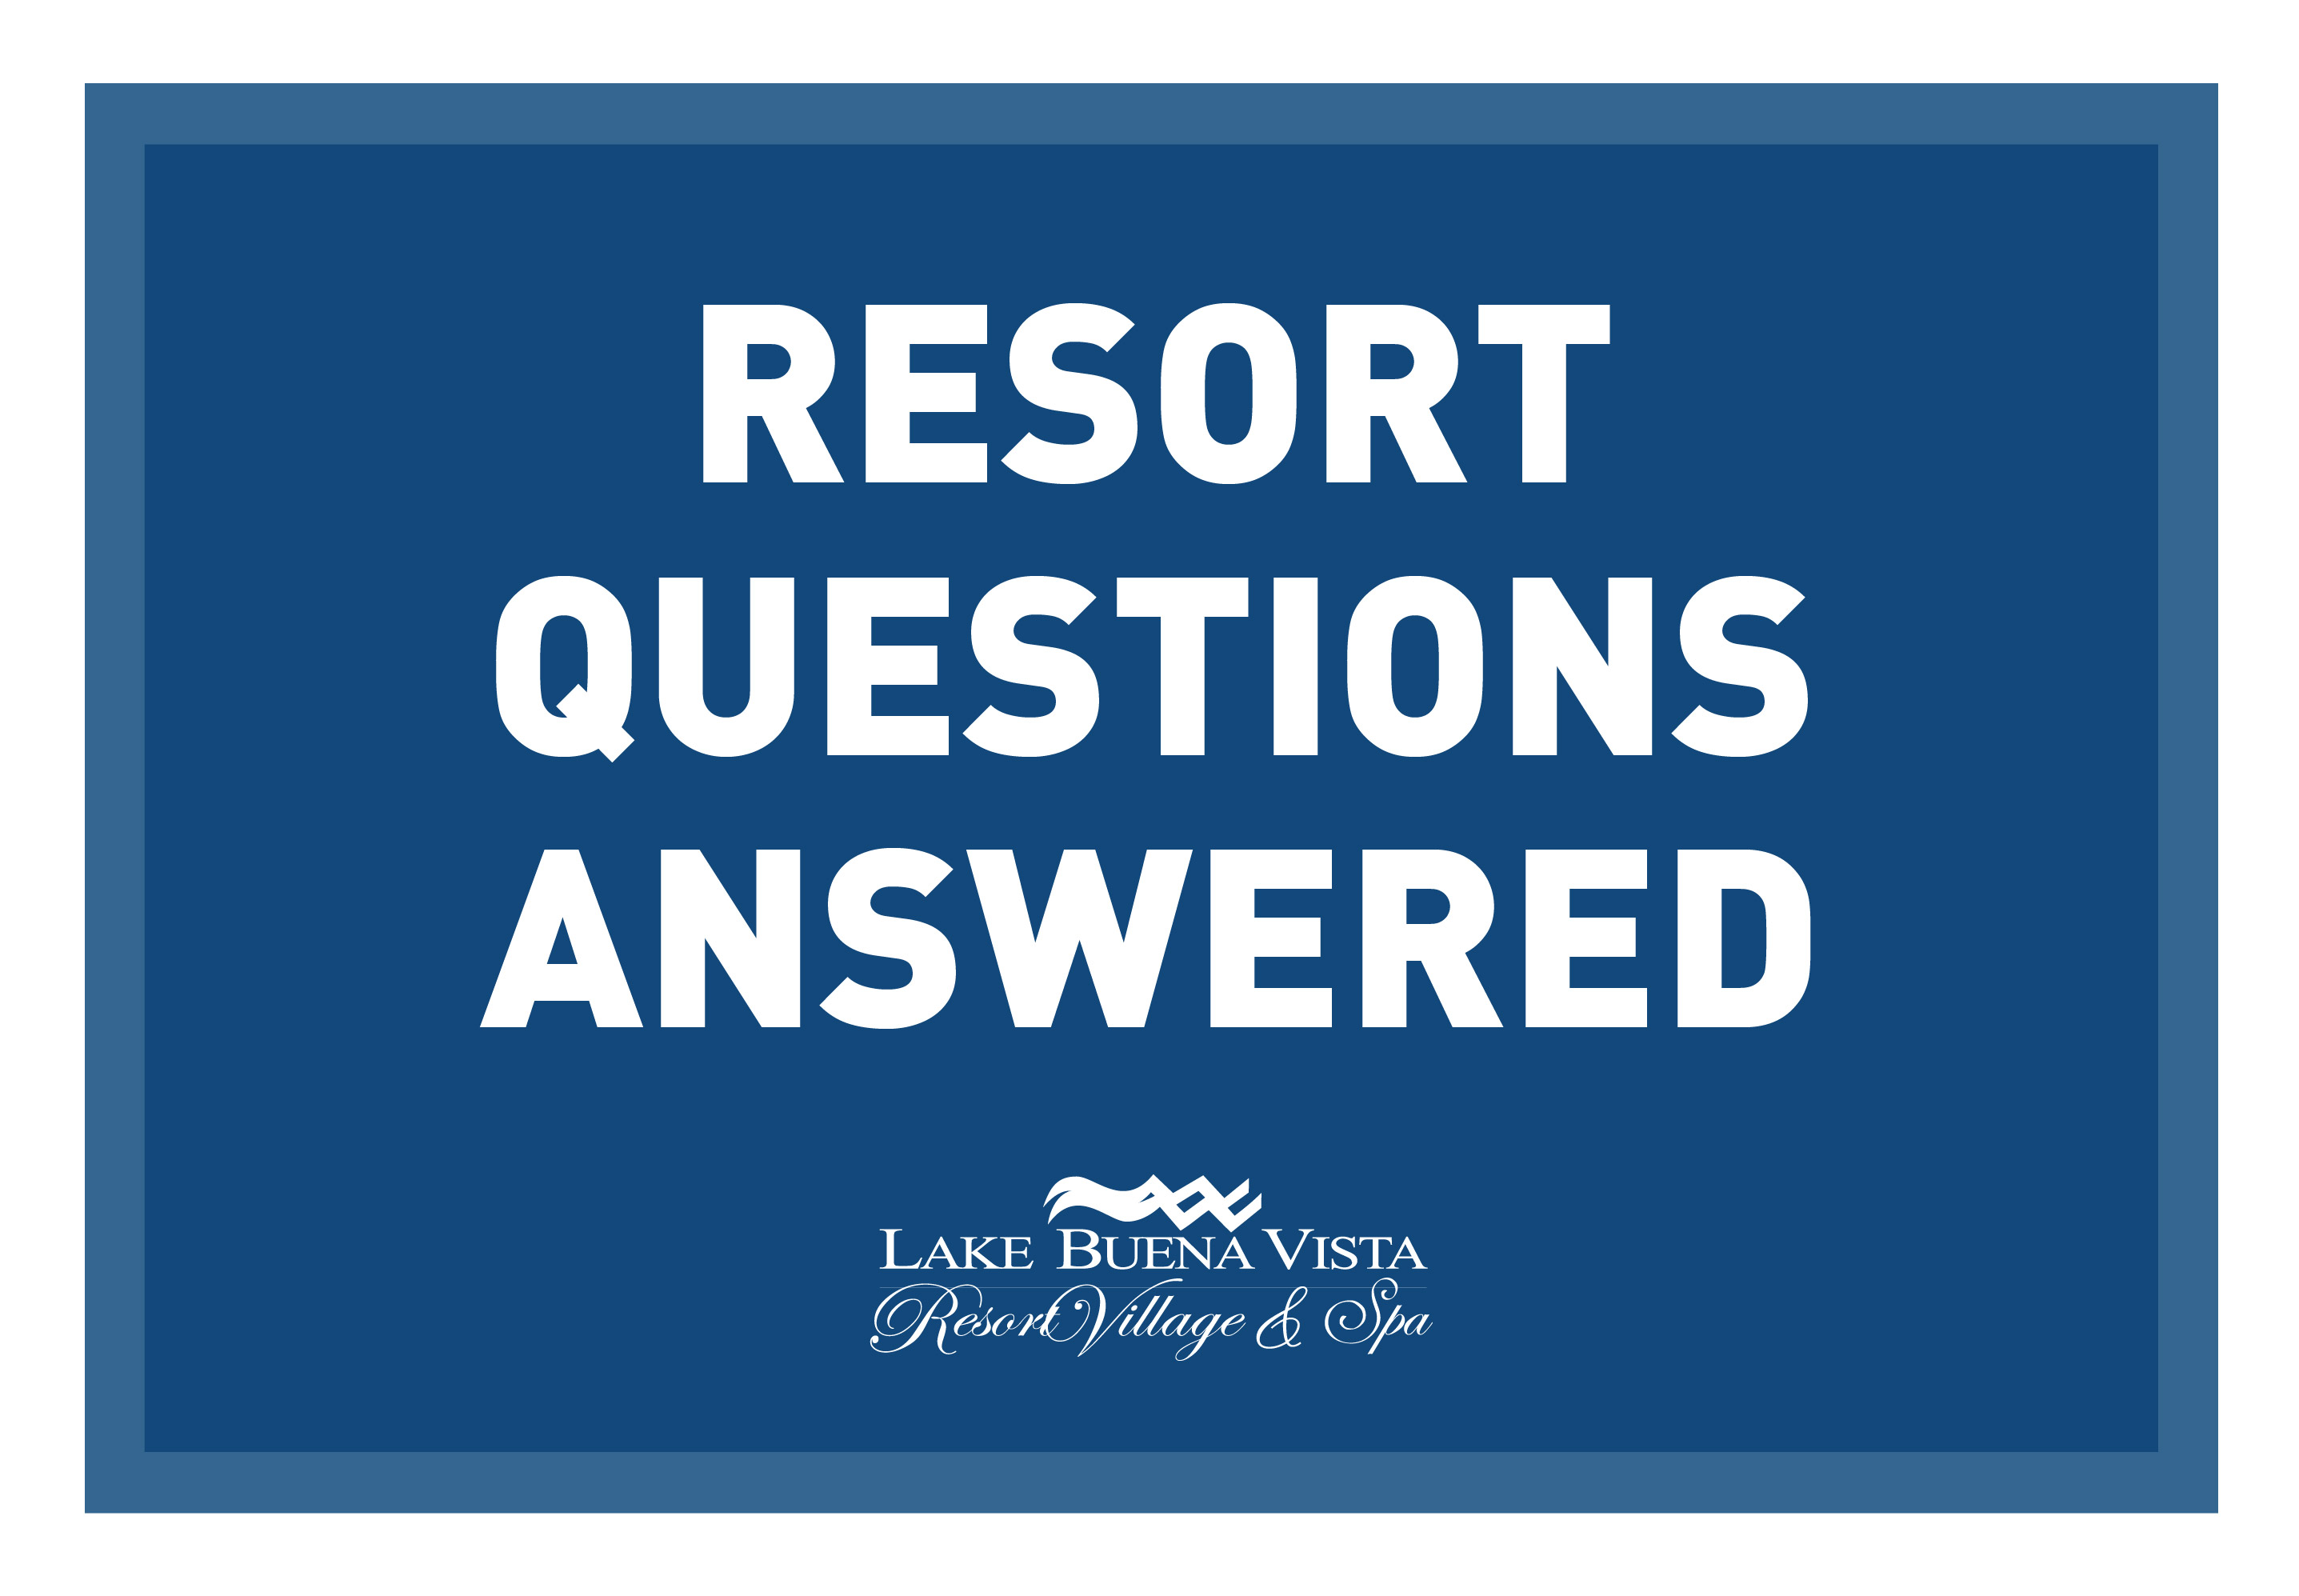 Lake Buena Vista Resort Village & Spa - Resort Questions